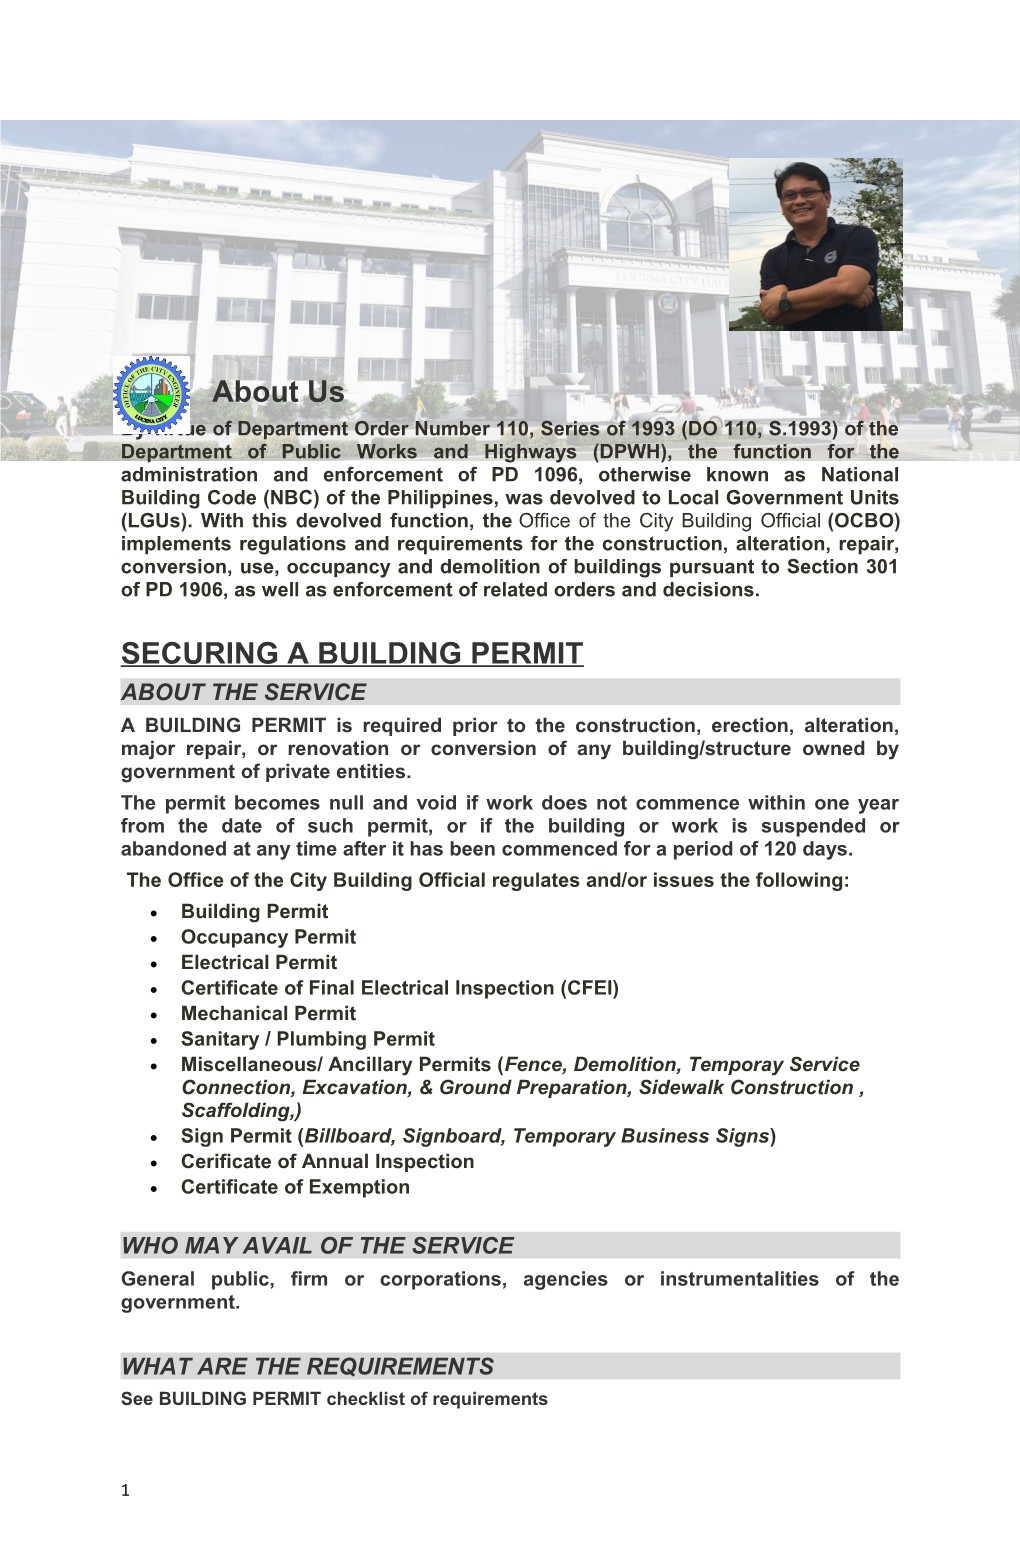 Securing a Building Permit